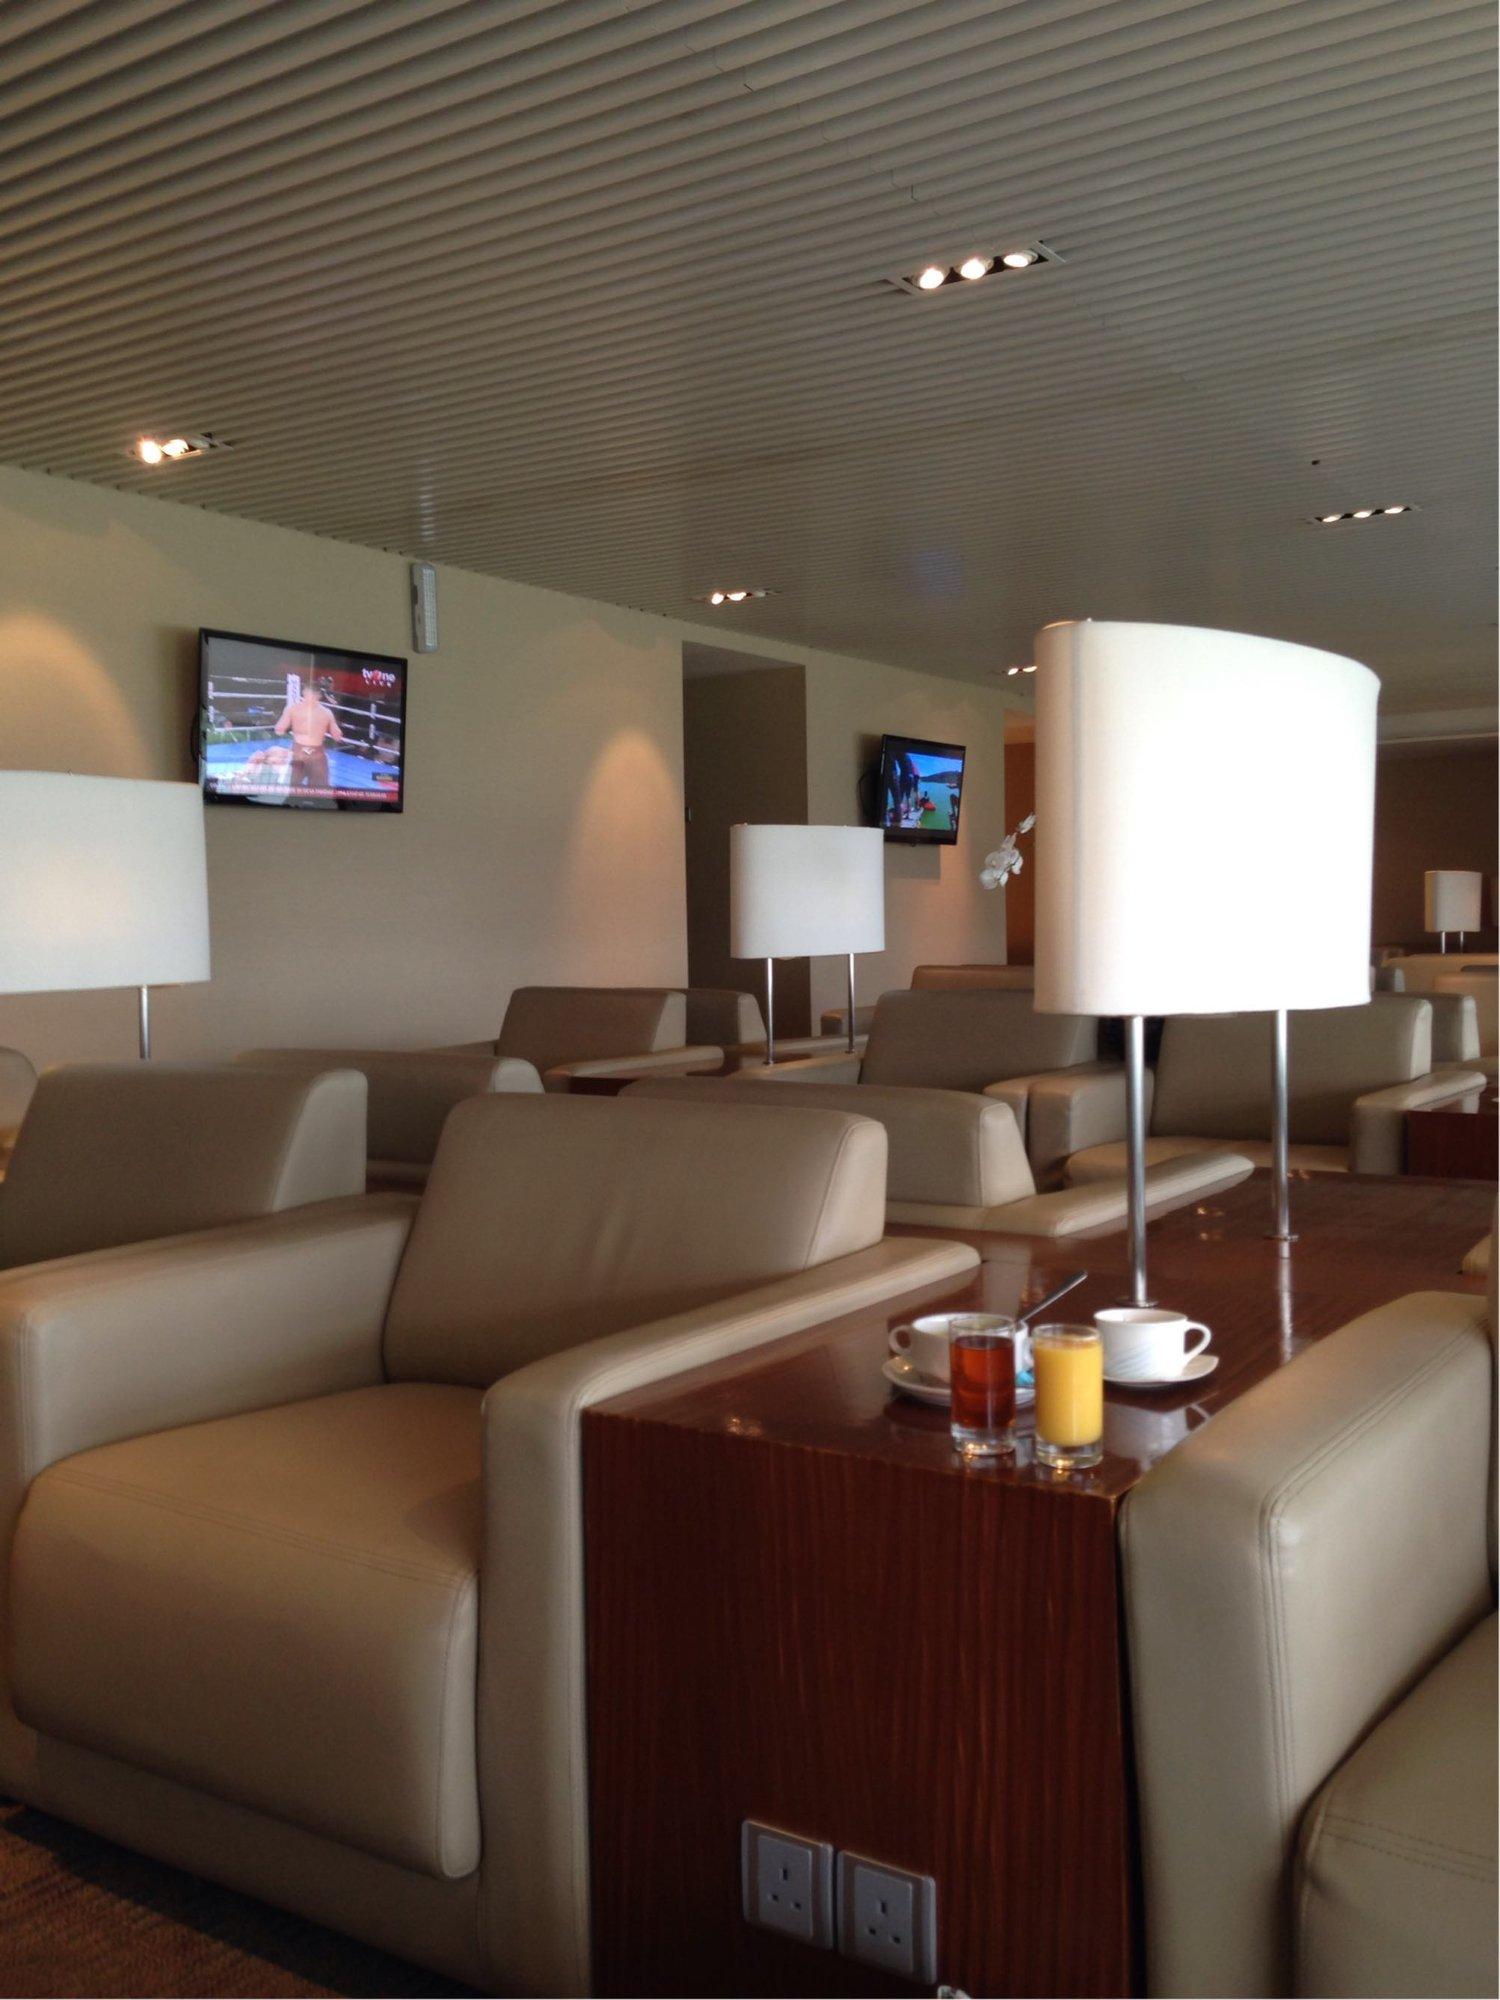 Garuda Indonesia Executive Lounge image 1 of 1